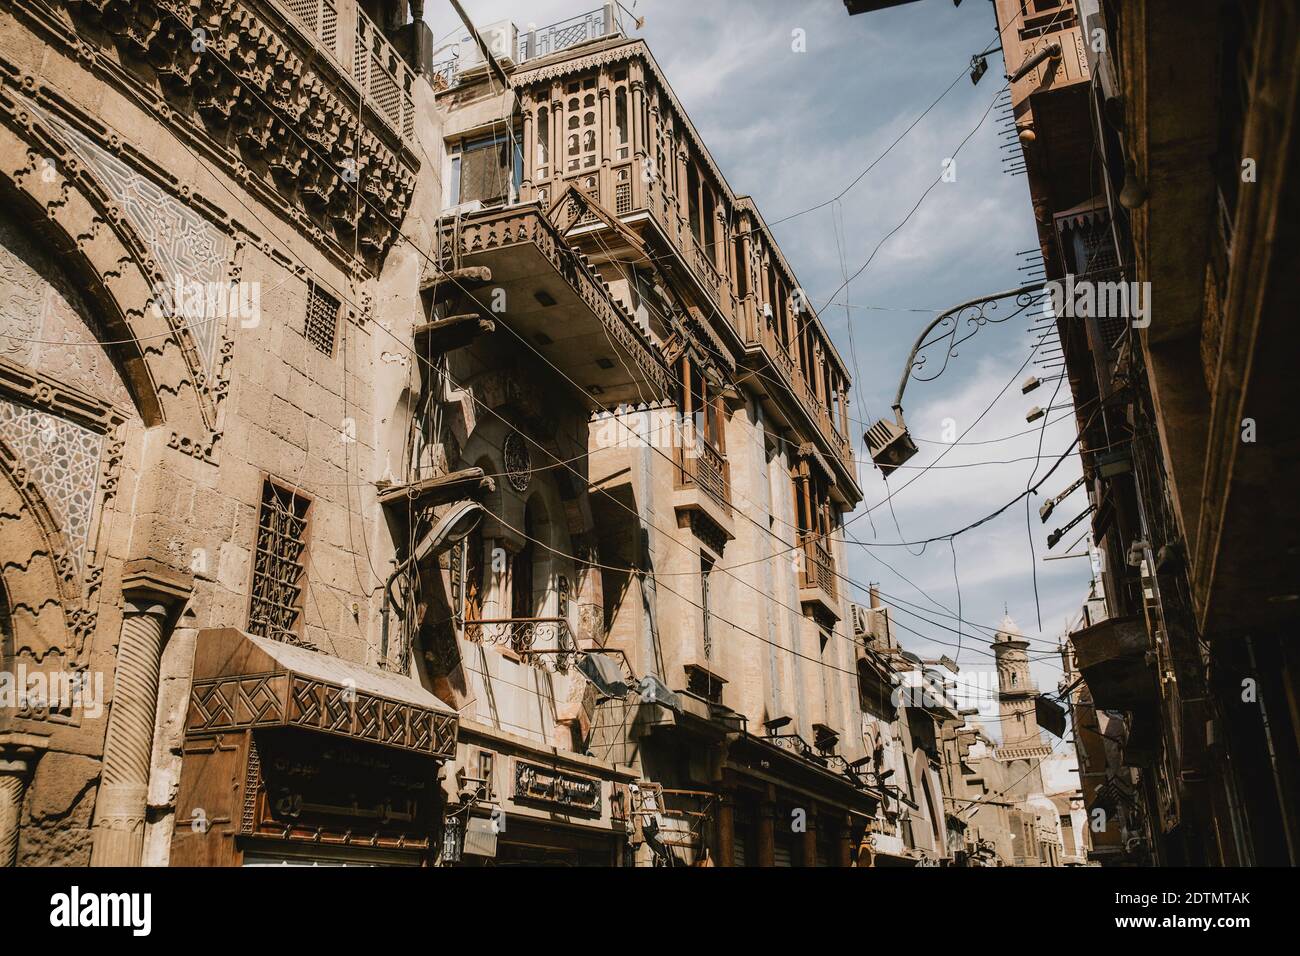 Street in Misr al-Qadima, old town in Cairo, Egypt Stock Photo